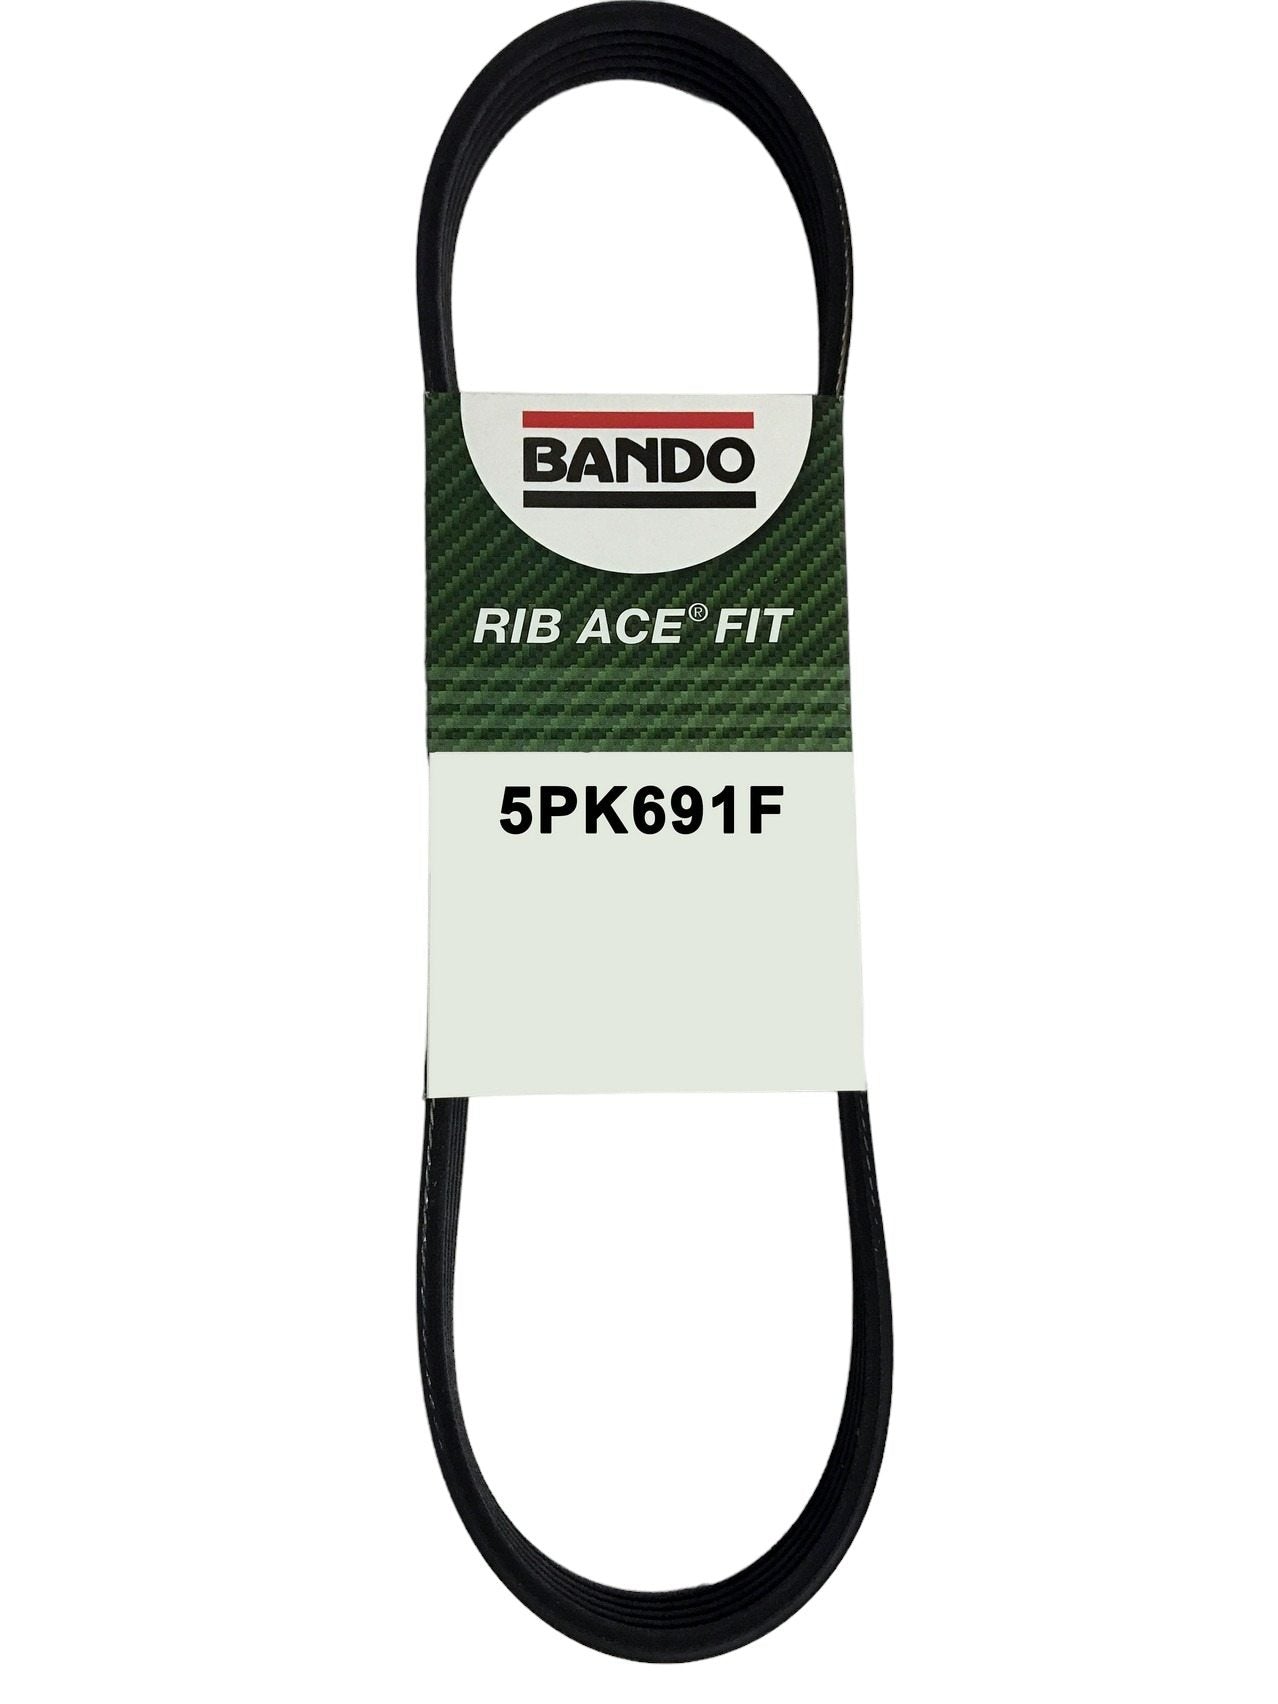 Bando Rib Ace Fit Precision Engineered FIT V-Ribbed Belt 5PK691F